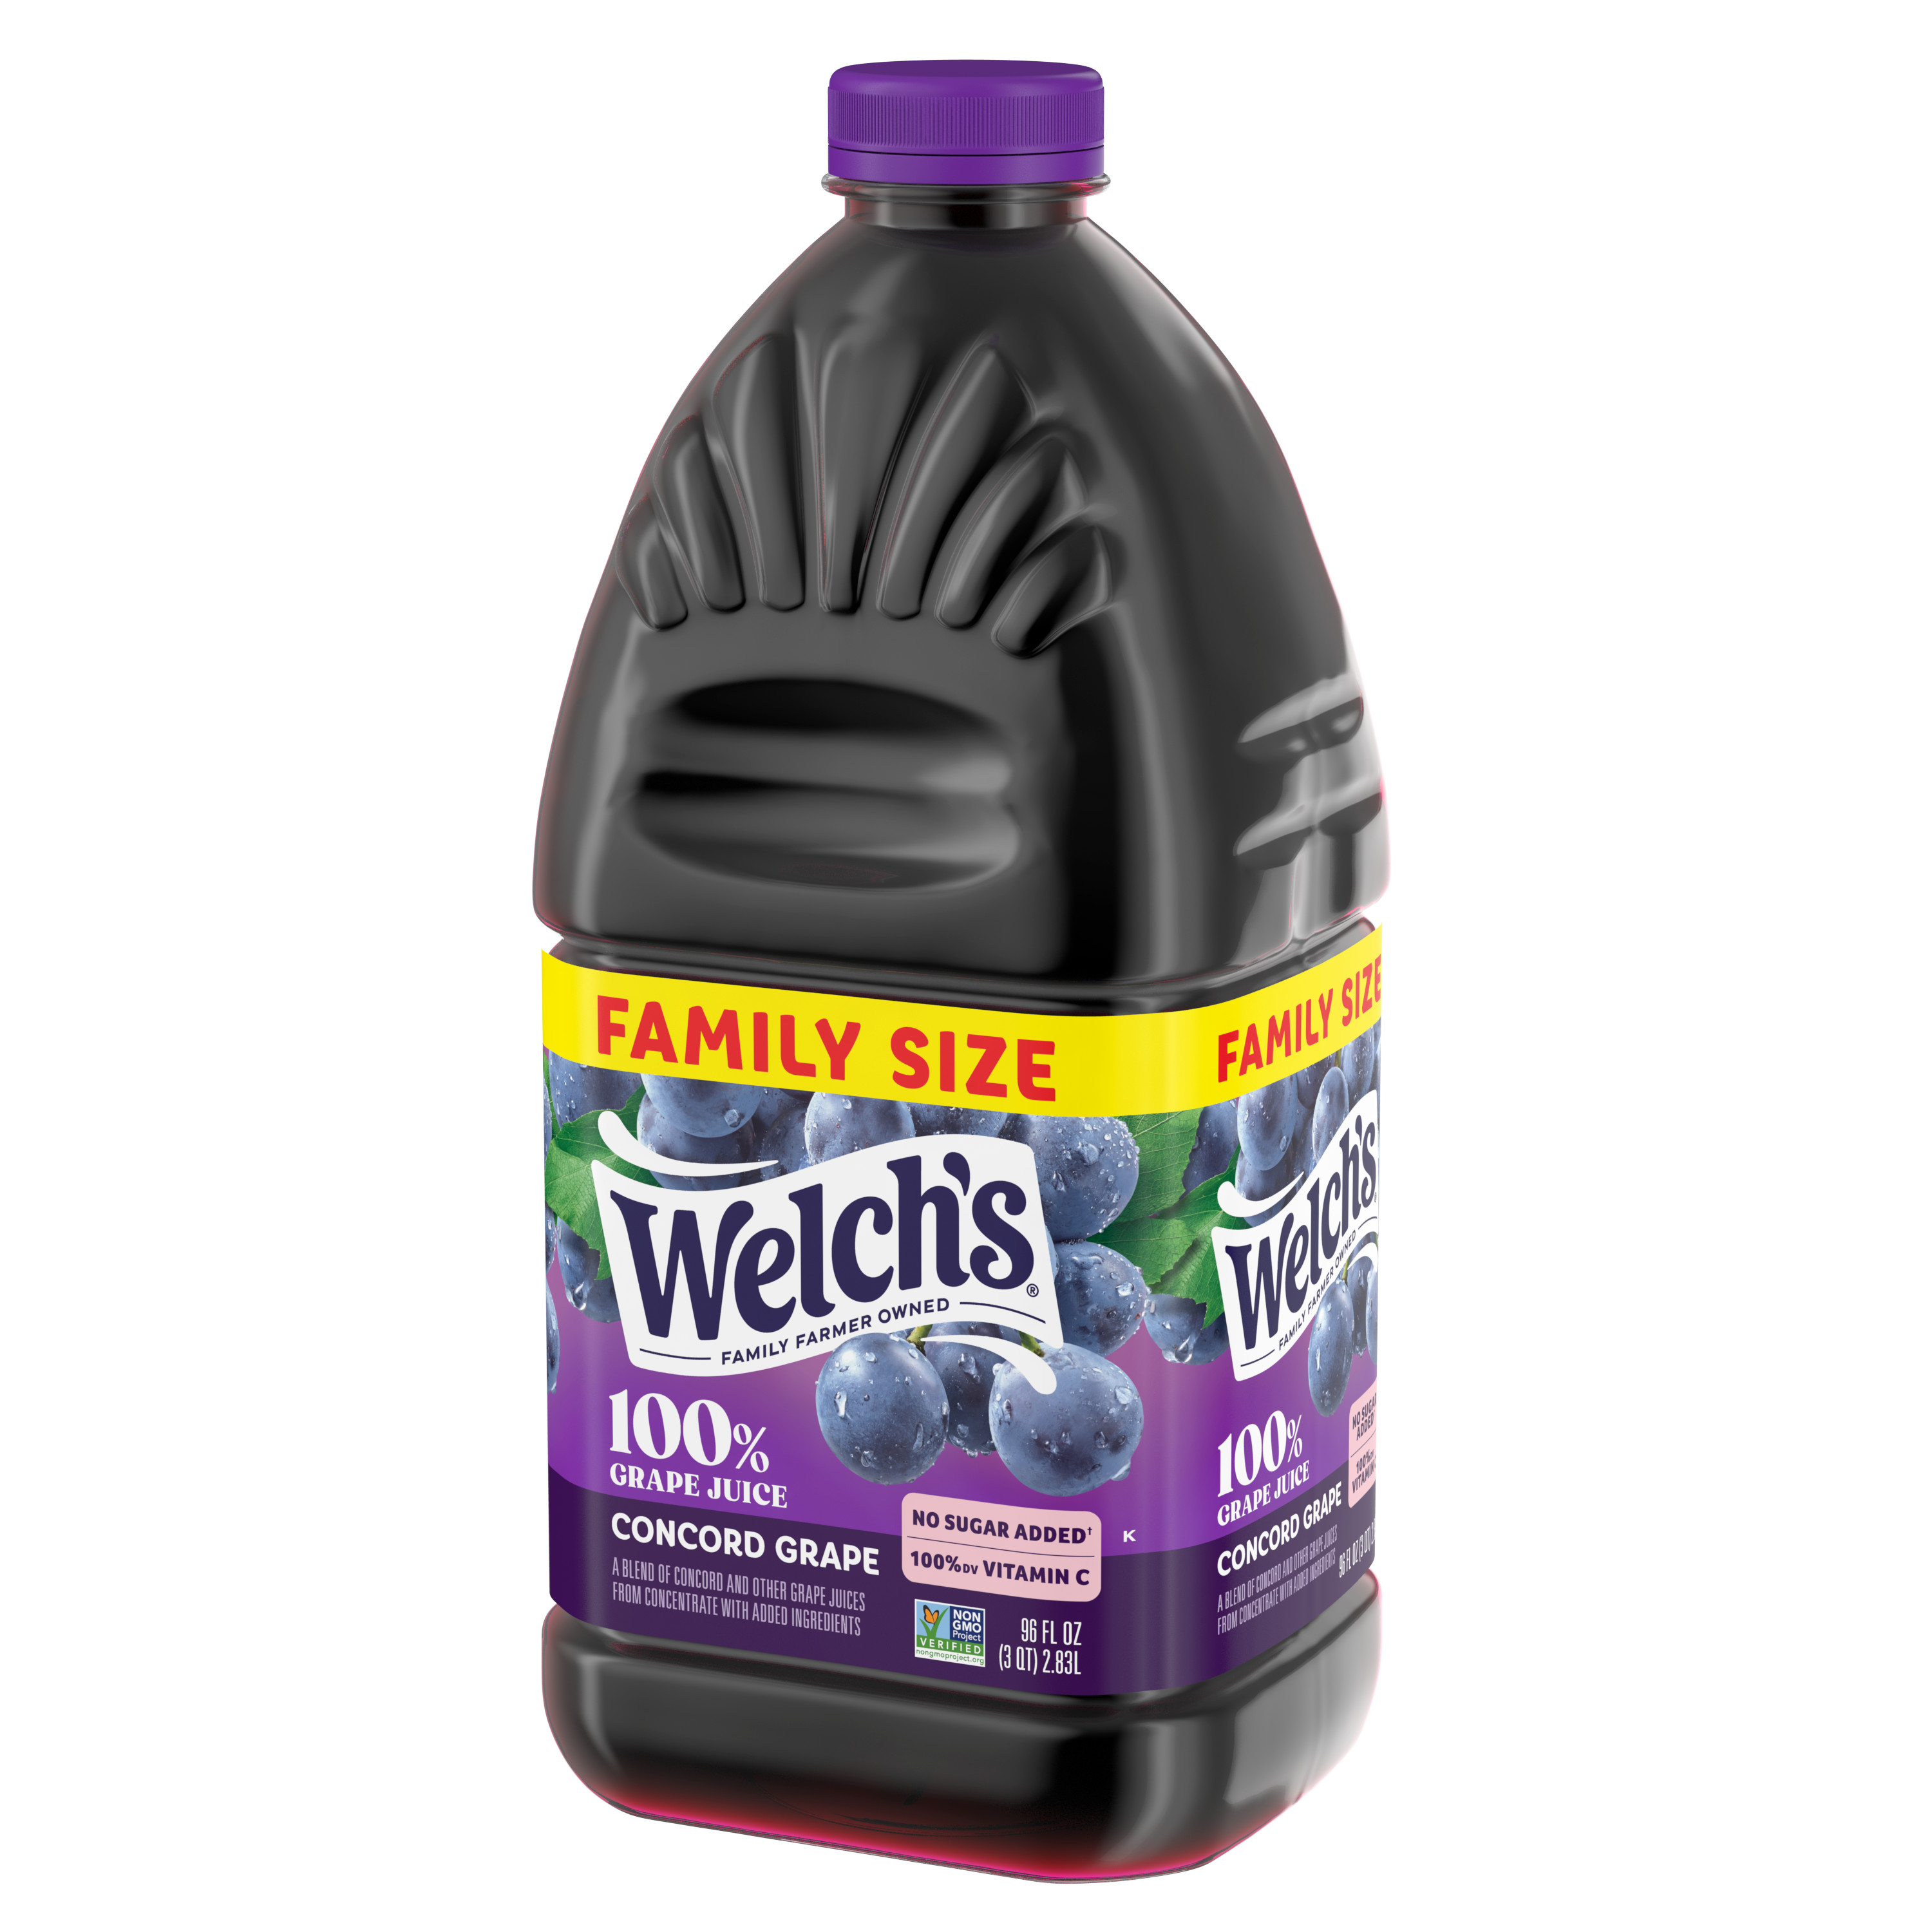 Welch's 100% Grape Juice, Concord Grape, 96 fl oz Bottle - image 3 of 9